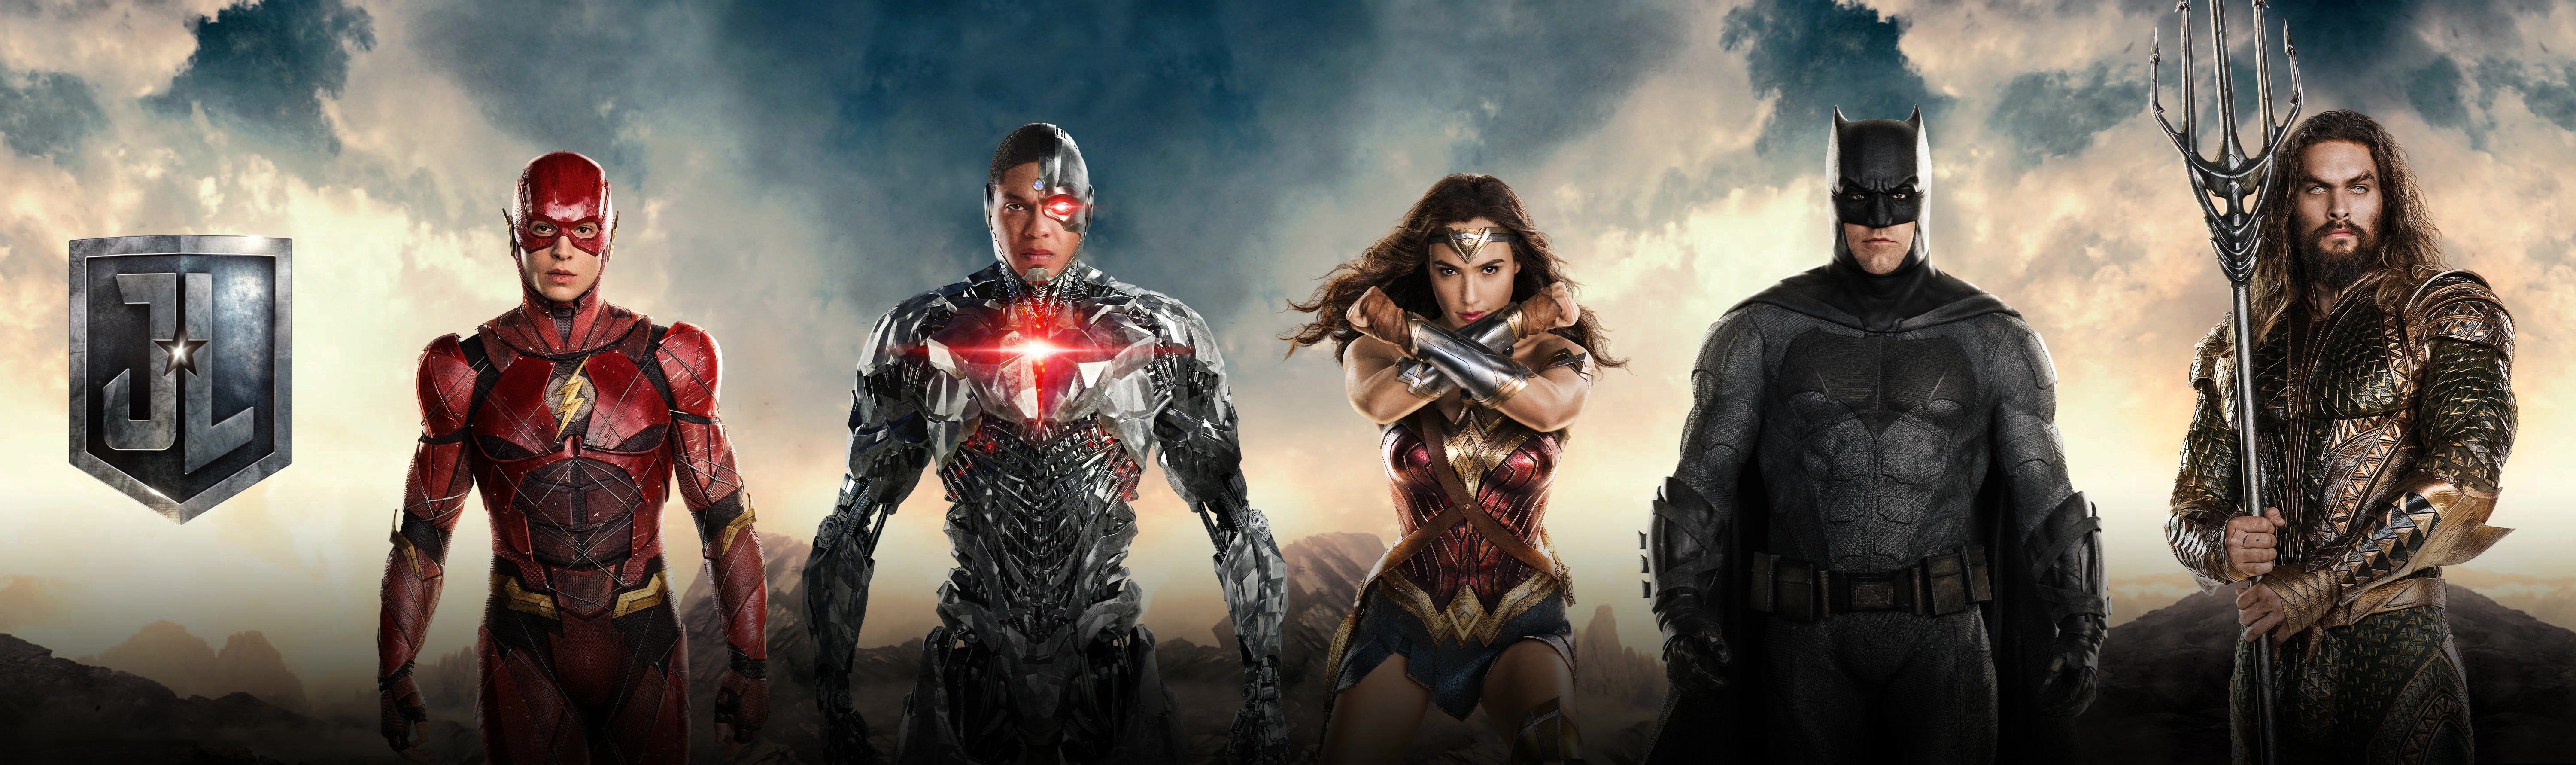 Gal Gadot #Cyborg Ben Affleck The Flash Justice League Ray Fisher Jason Momoa #Aquaman Wonder Woman #Batm. Justice league, Wonder woman, Justice league characters